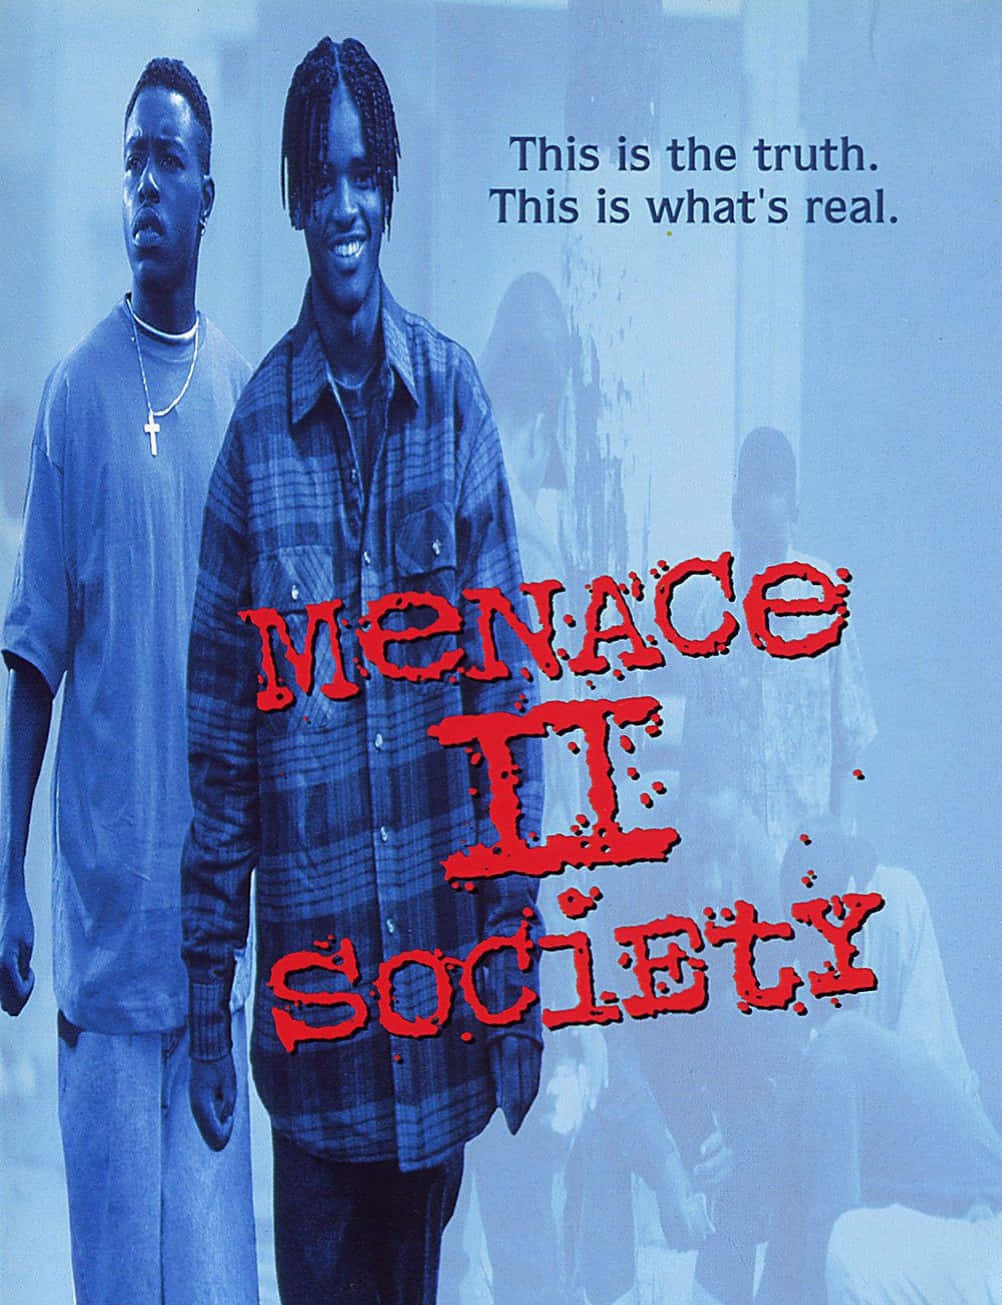 Blauermenace Ii Society Portrait Poster Wallpaper